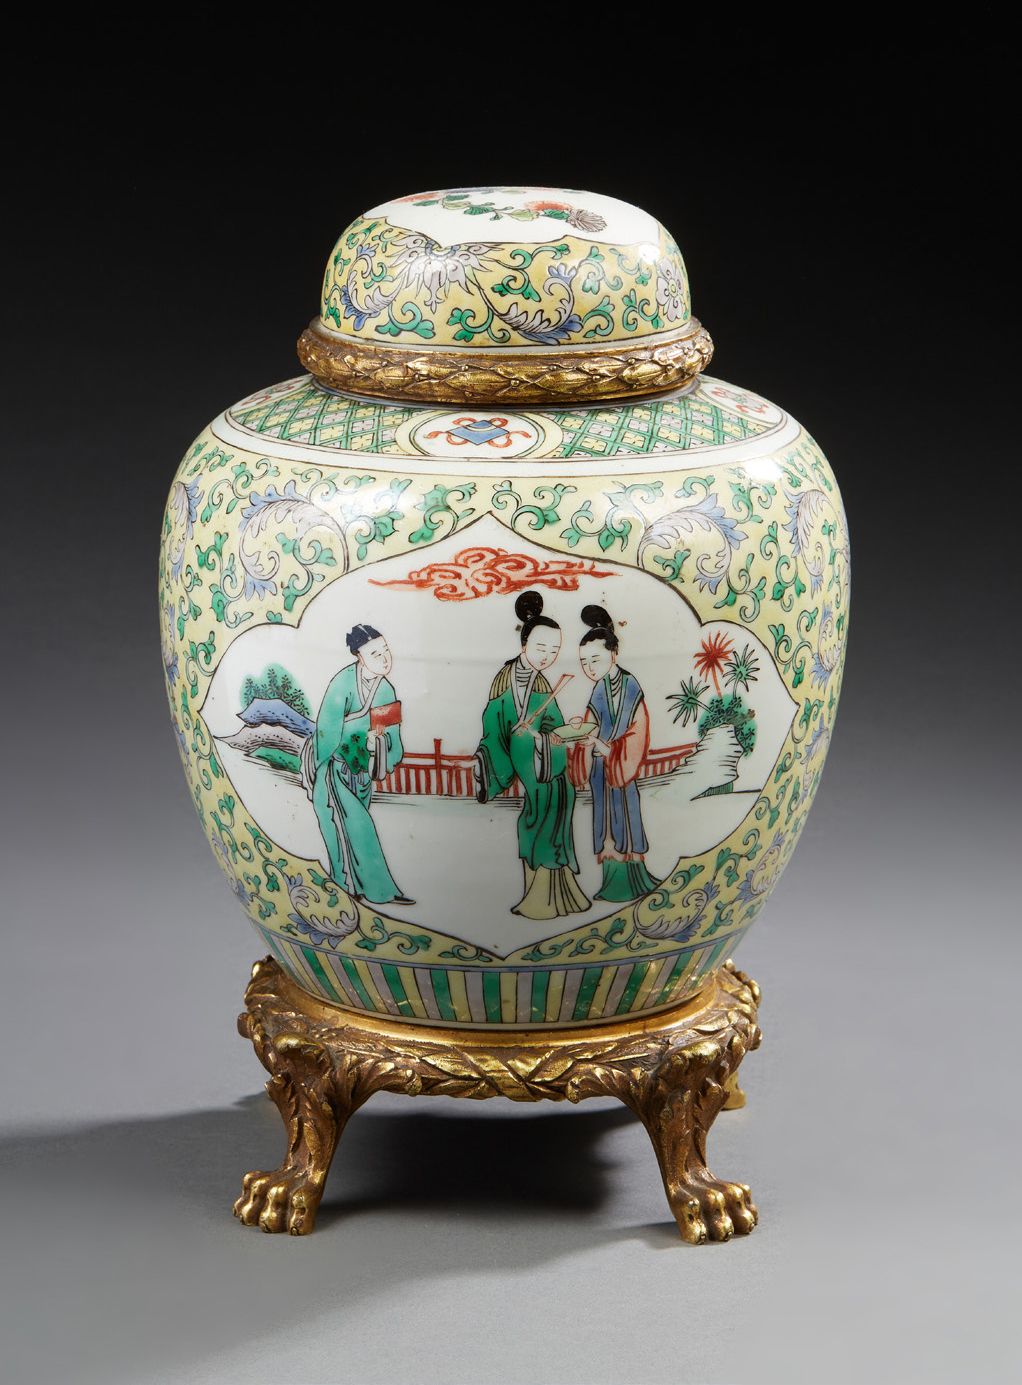 CHINE 绿色家族珐琅彩装饰的有盖姜罐，黄底上有叶子和荷花的框子。
19世纪末 高：27厘米